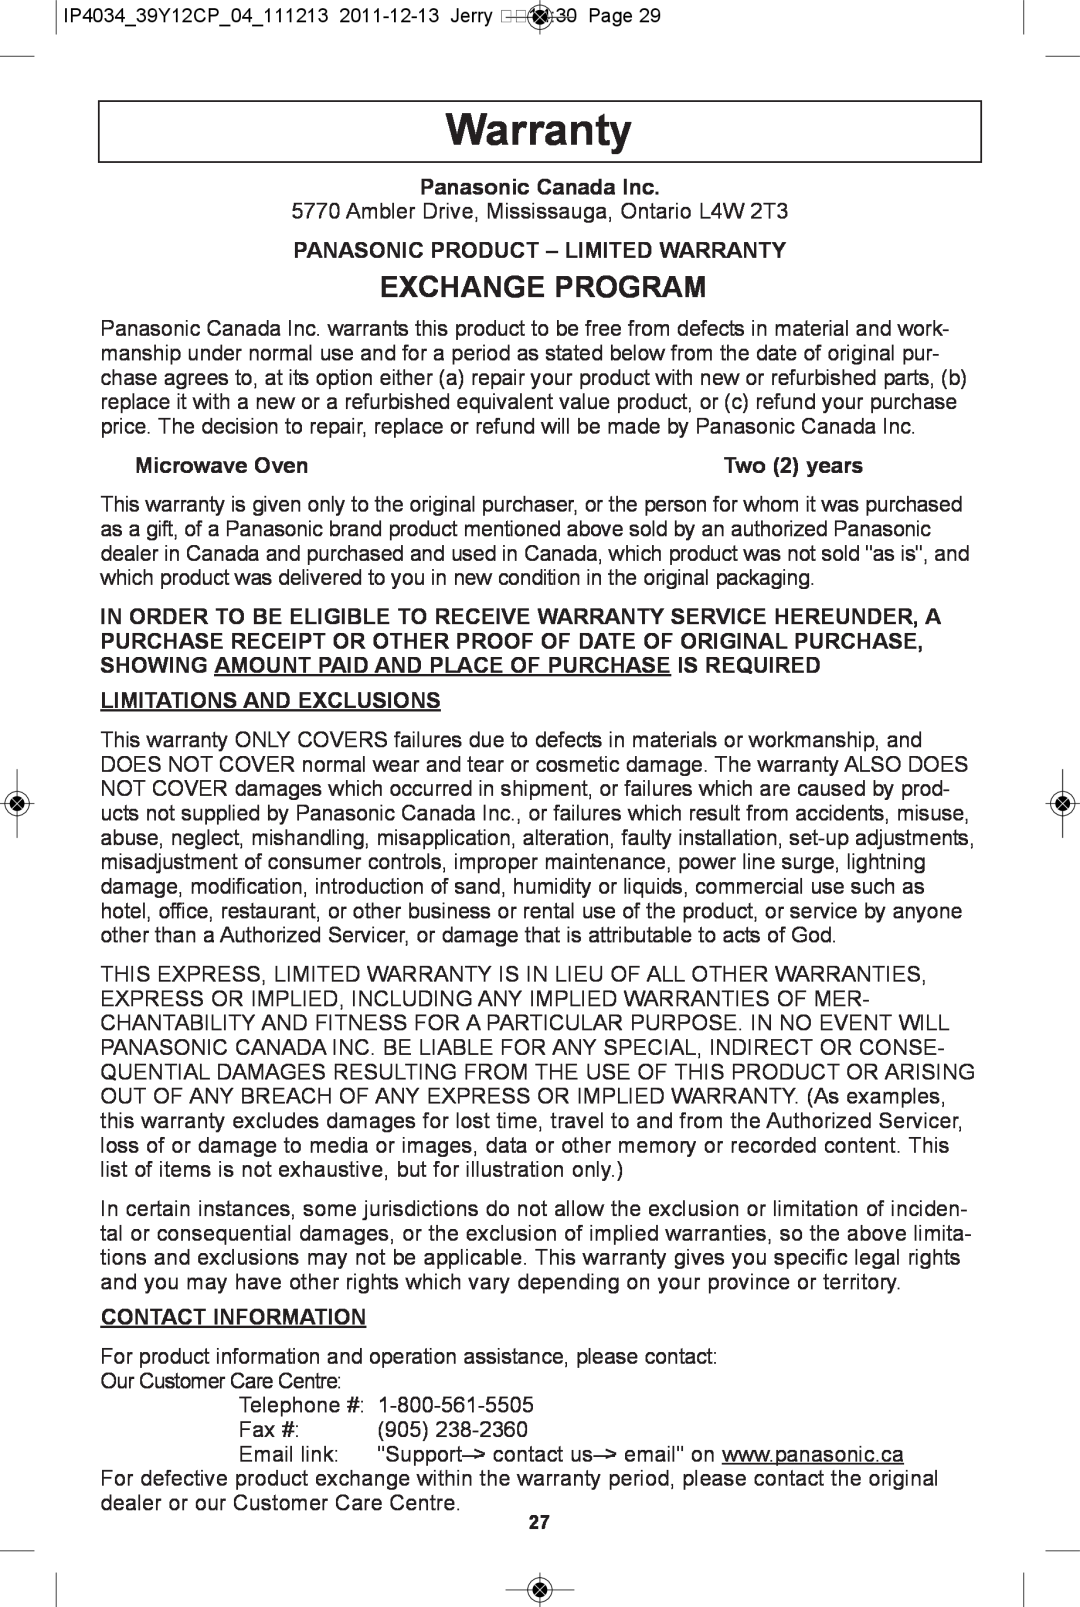 Panasonic NN-ST652W manual Exchange Program, Panasonic Canada Inc, Panasonic Product - Limited Warranty, Microwave Oven 